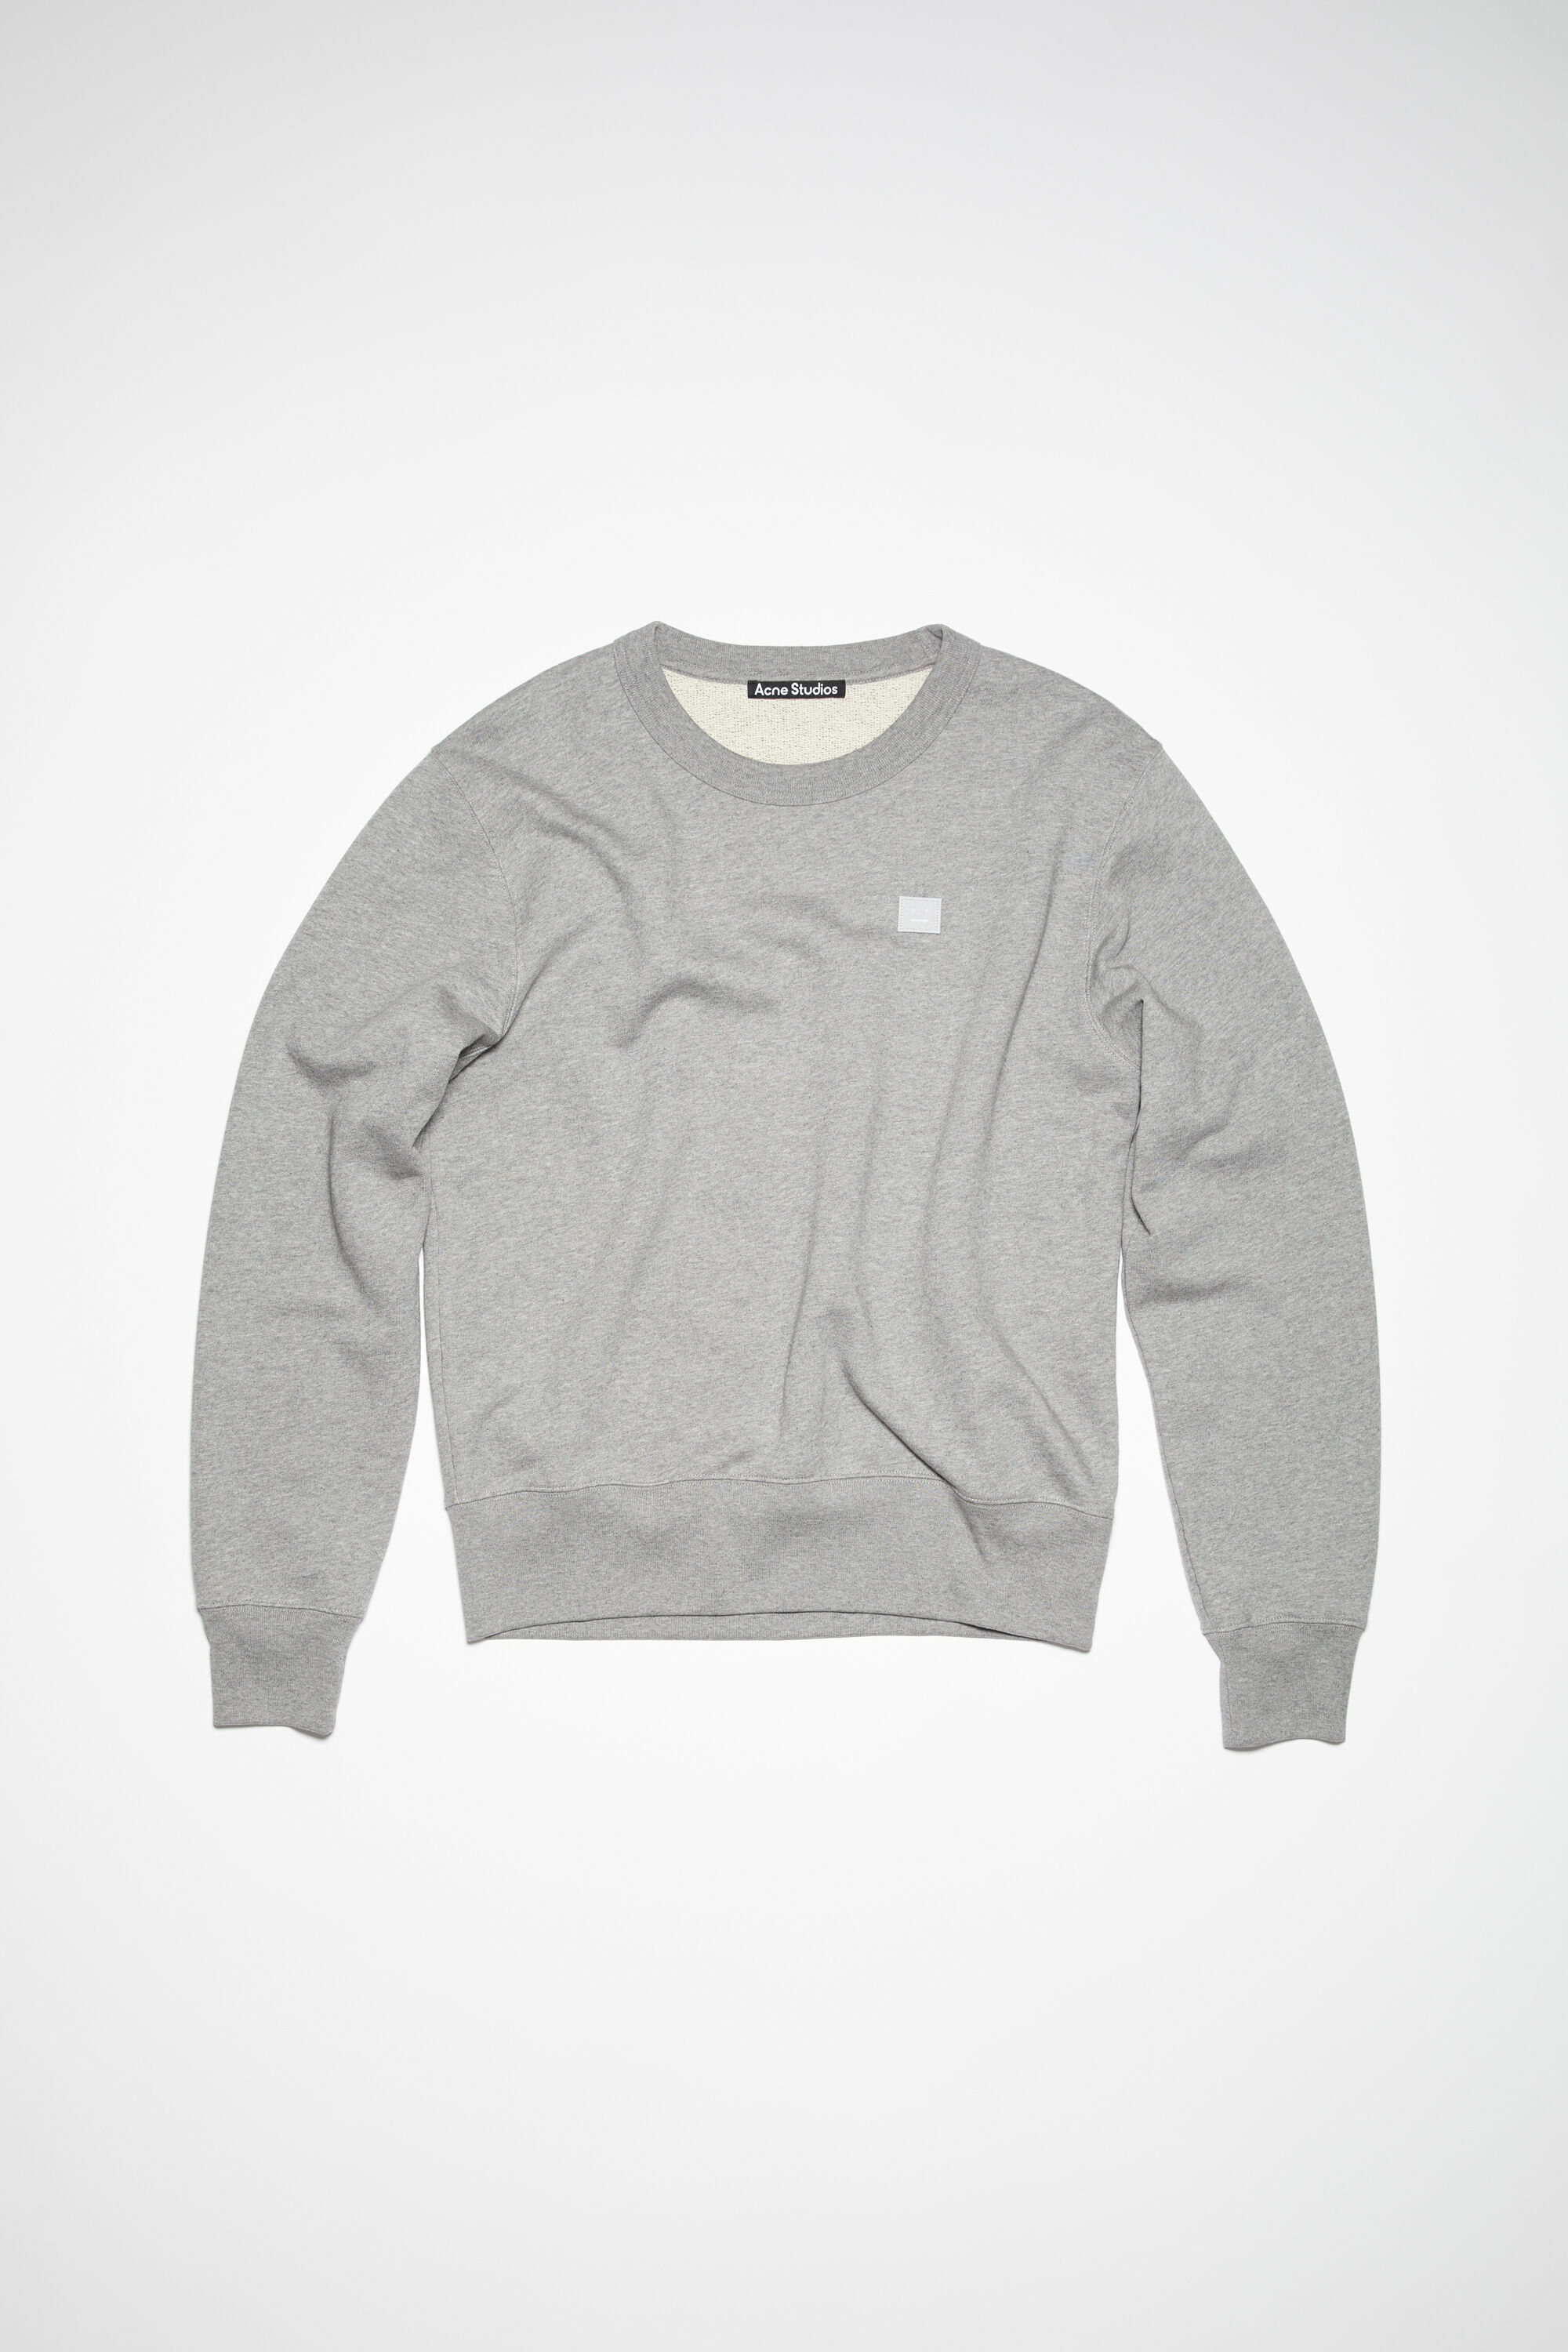 Acne Studios - Crew neck sweater - Regular fit - Light Grey Melange